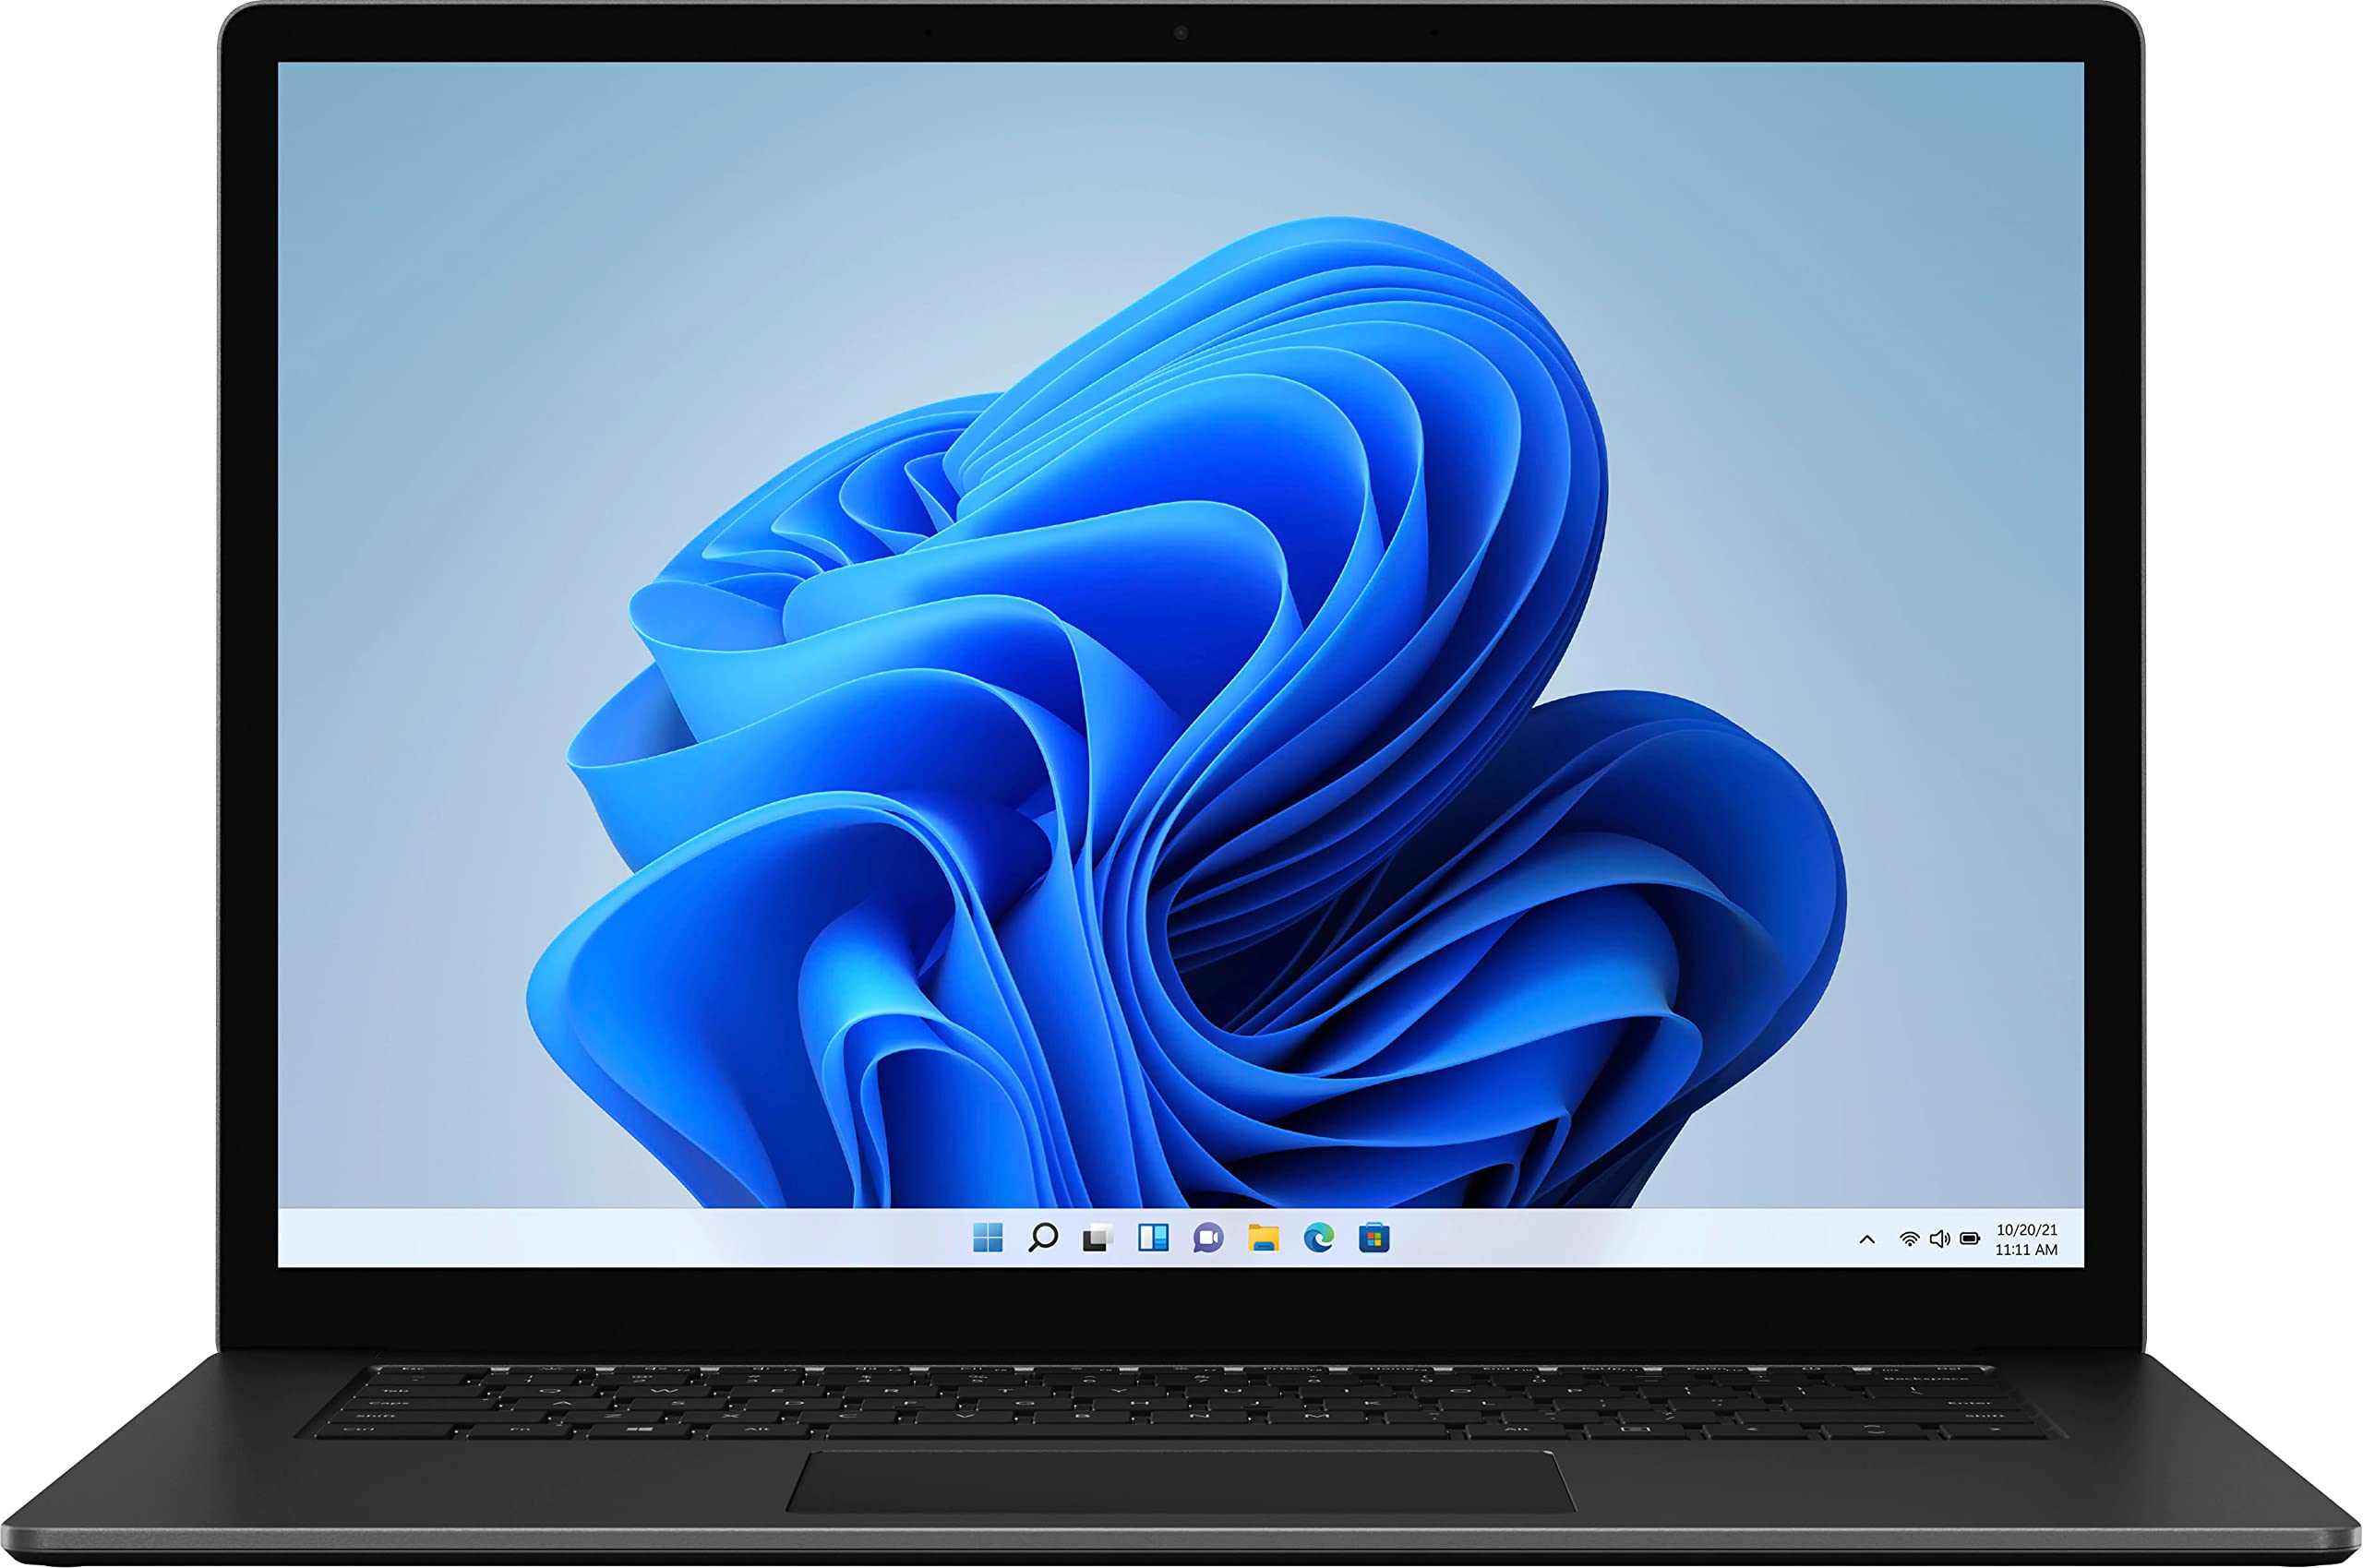 Microsoft Surface Laptop 4 13.5" Touchscreen (11th Gen Intel Core i7-1135G7 for Multi-Tasking, 16GB DDR4 RAM, 256GB NVMe SSD) Ultra-Thin and Light, Long Battery Life, Windows 10 Pro, Black (Renewed)